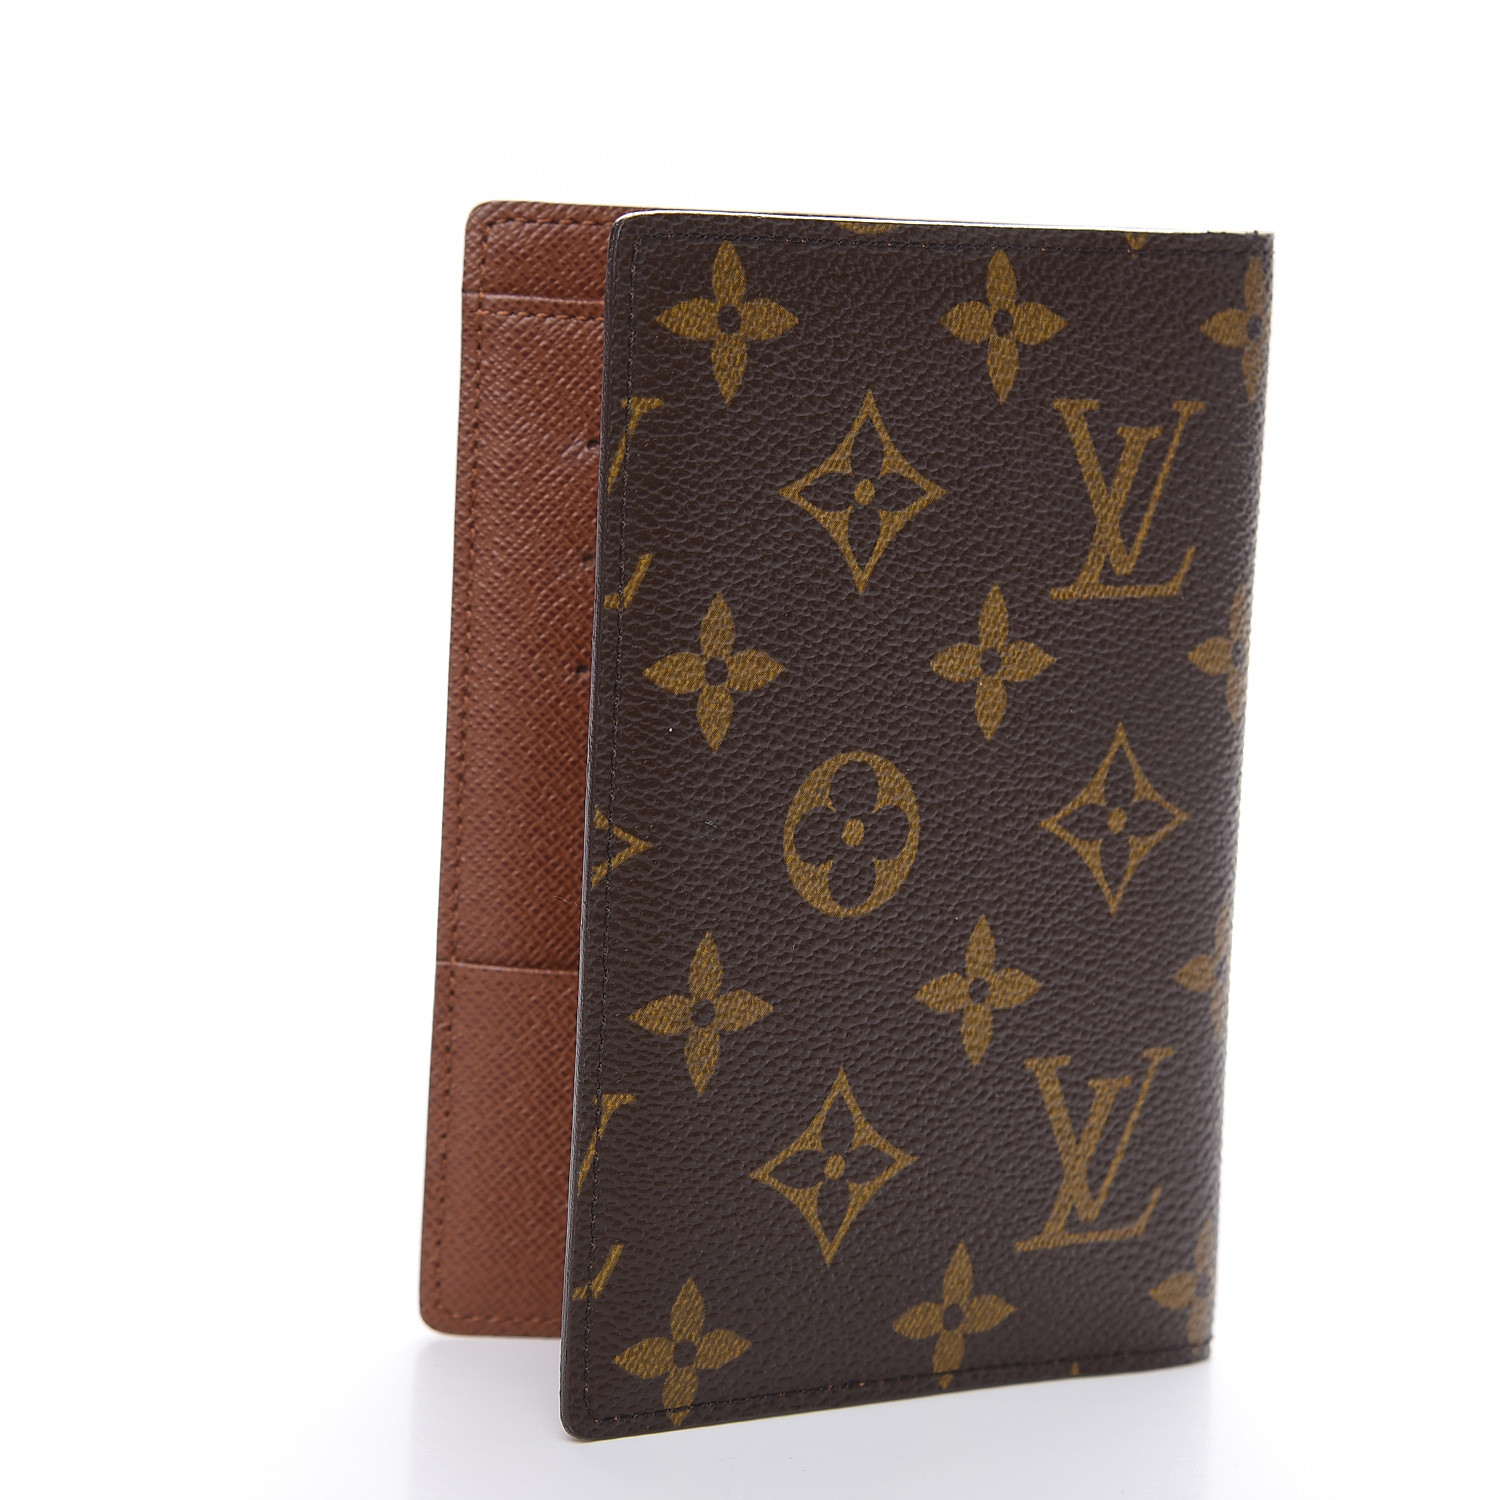 Louis Vuitton Wallet & Passport Cover Holder Vivienne Holiday